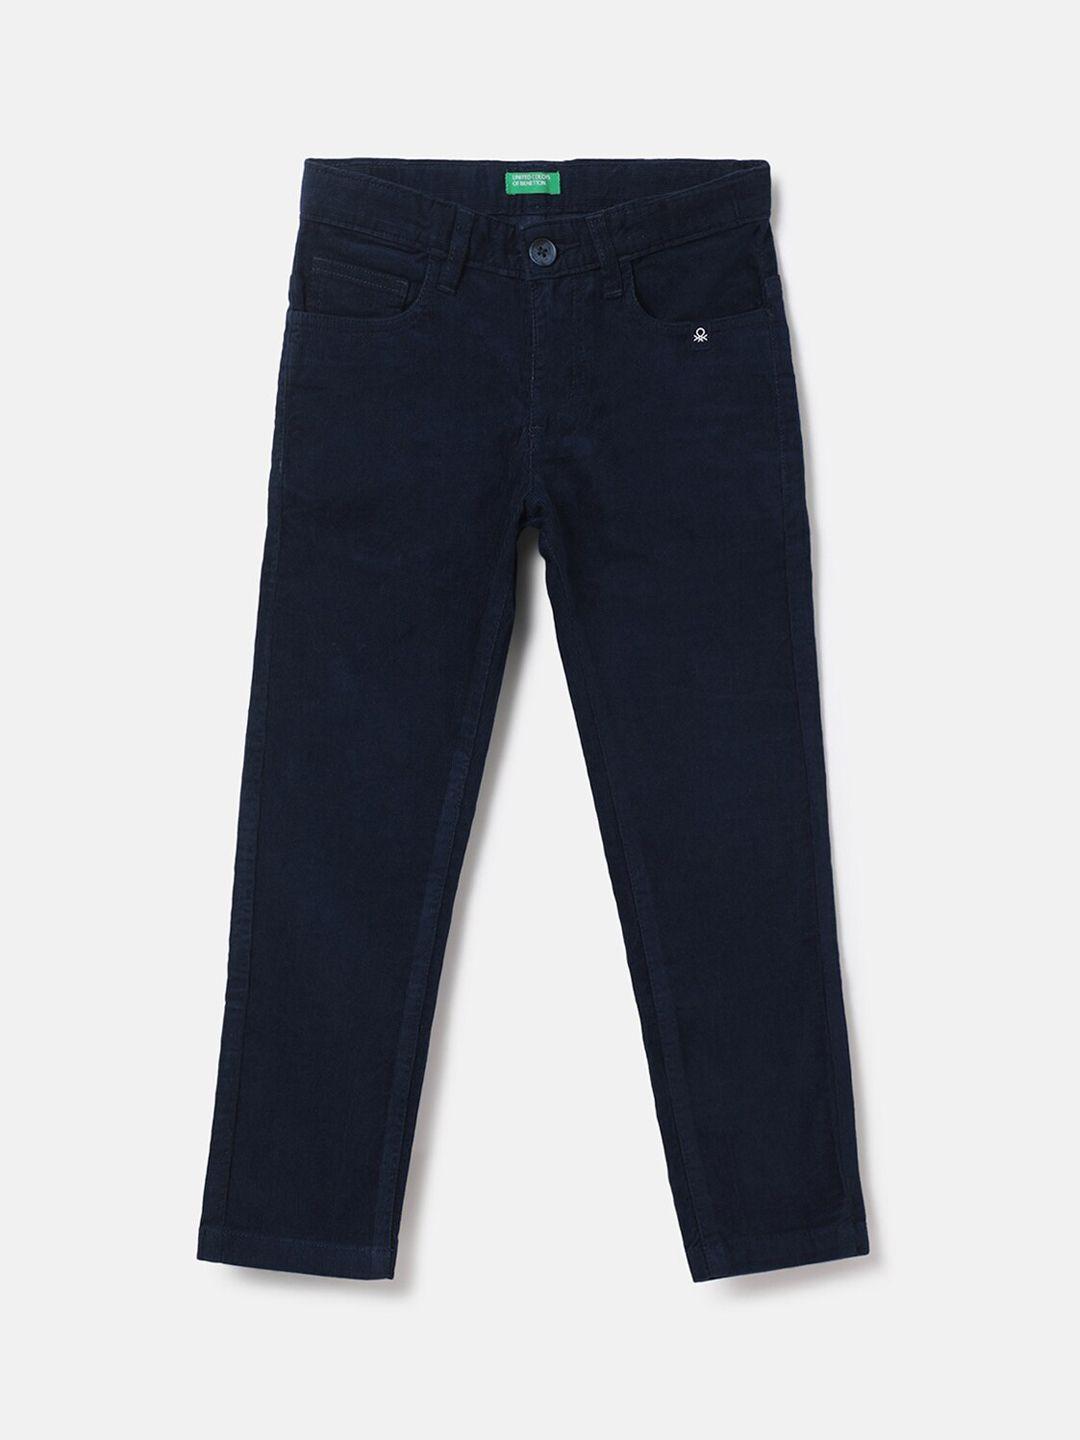 United Colors of Benetton Boys Navy Blue Cotton Slim Fit Jeans